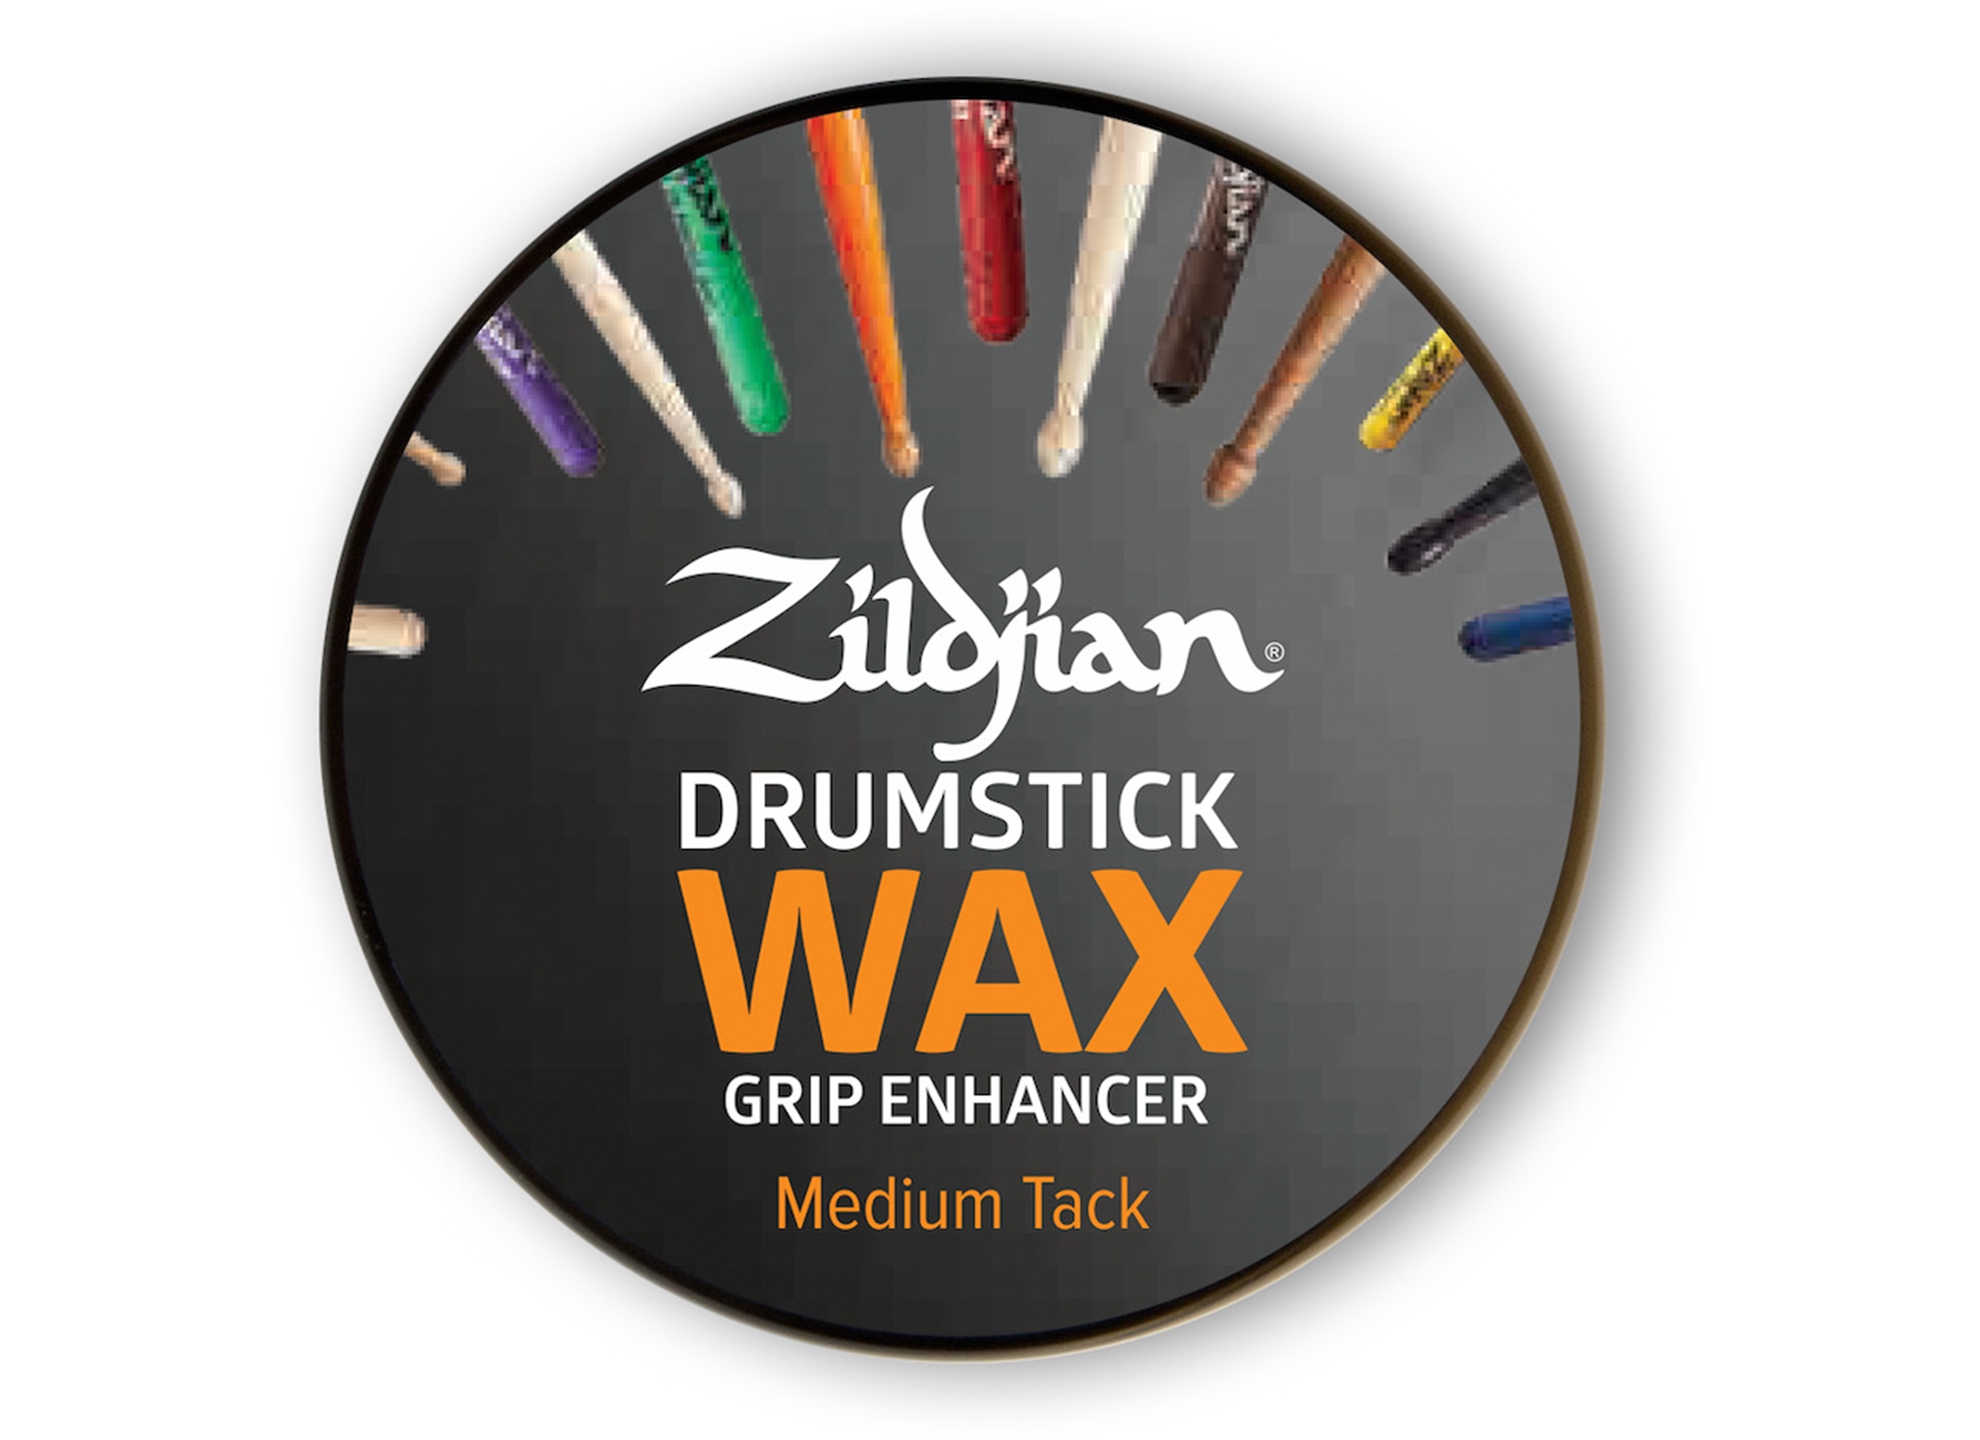 Drumstick Wax Grip Enhancer M